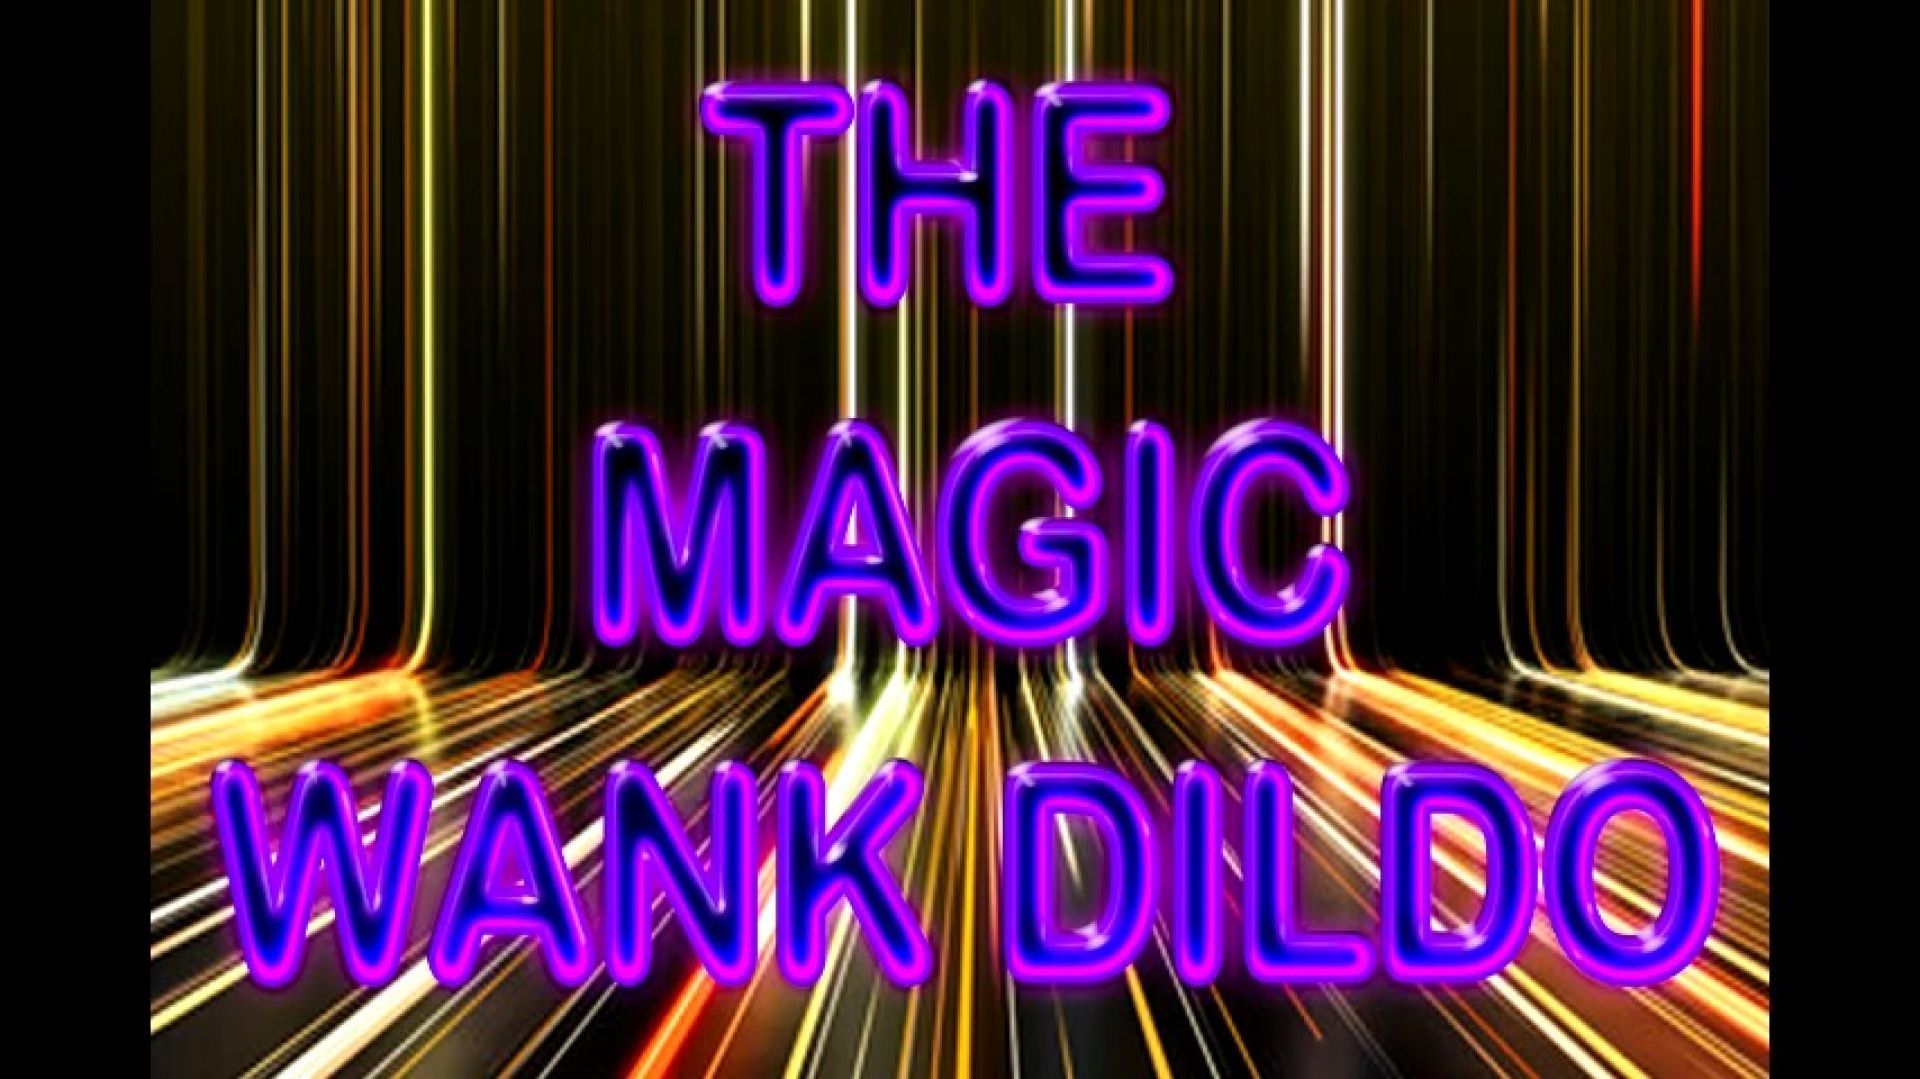 THE MAGIC WANK DILDO